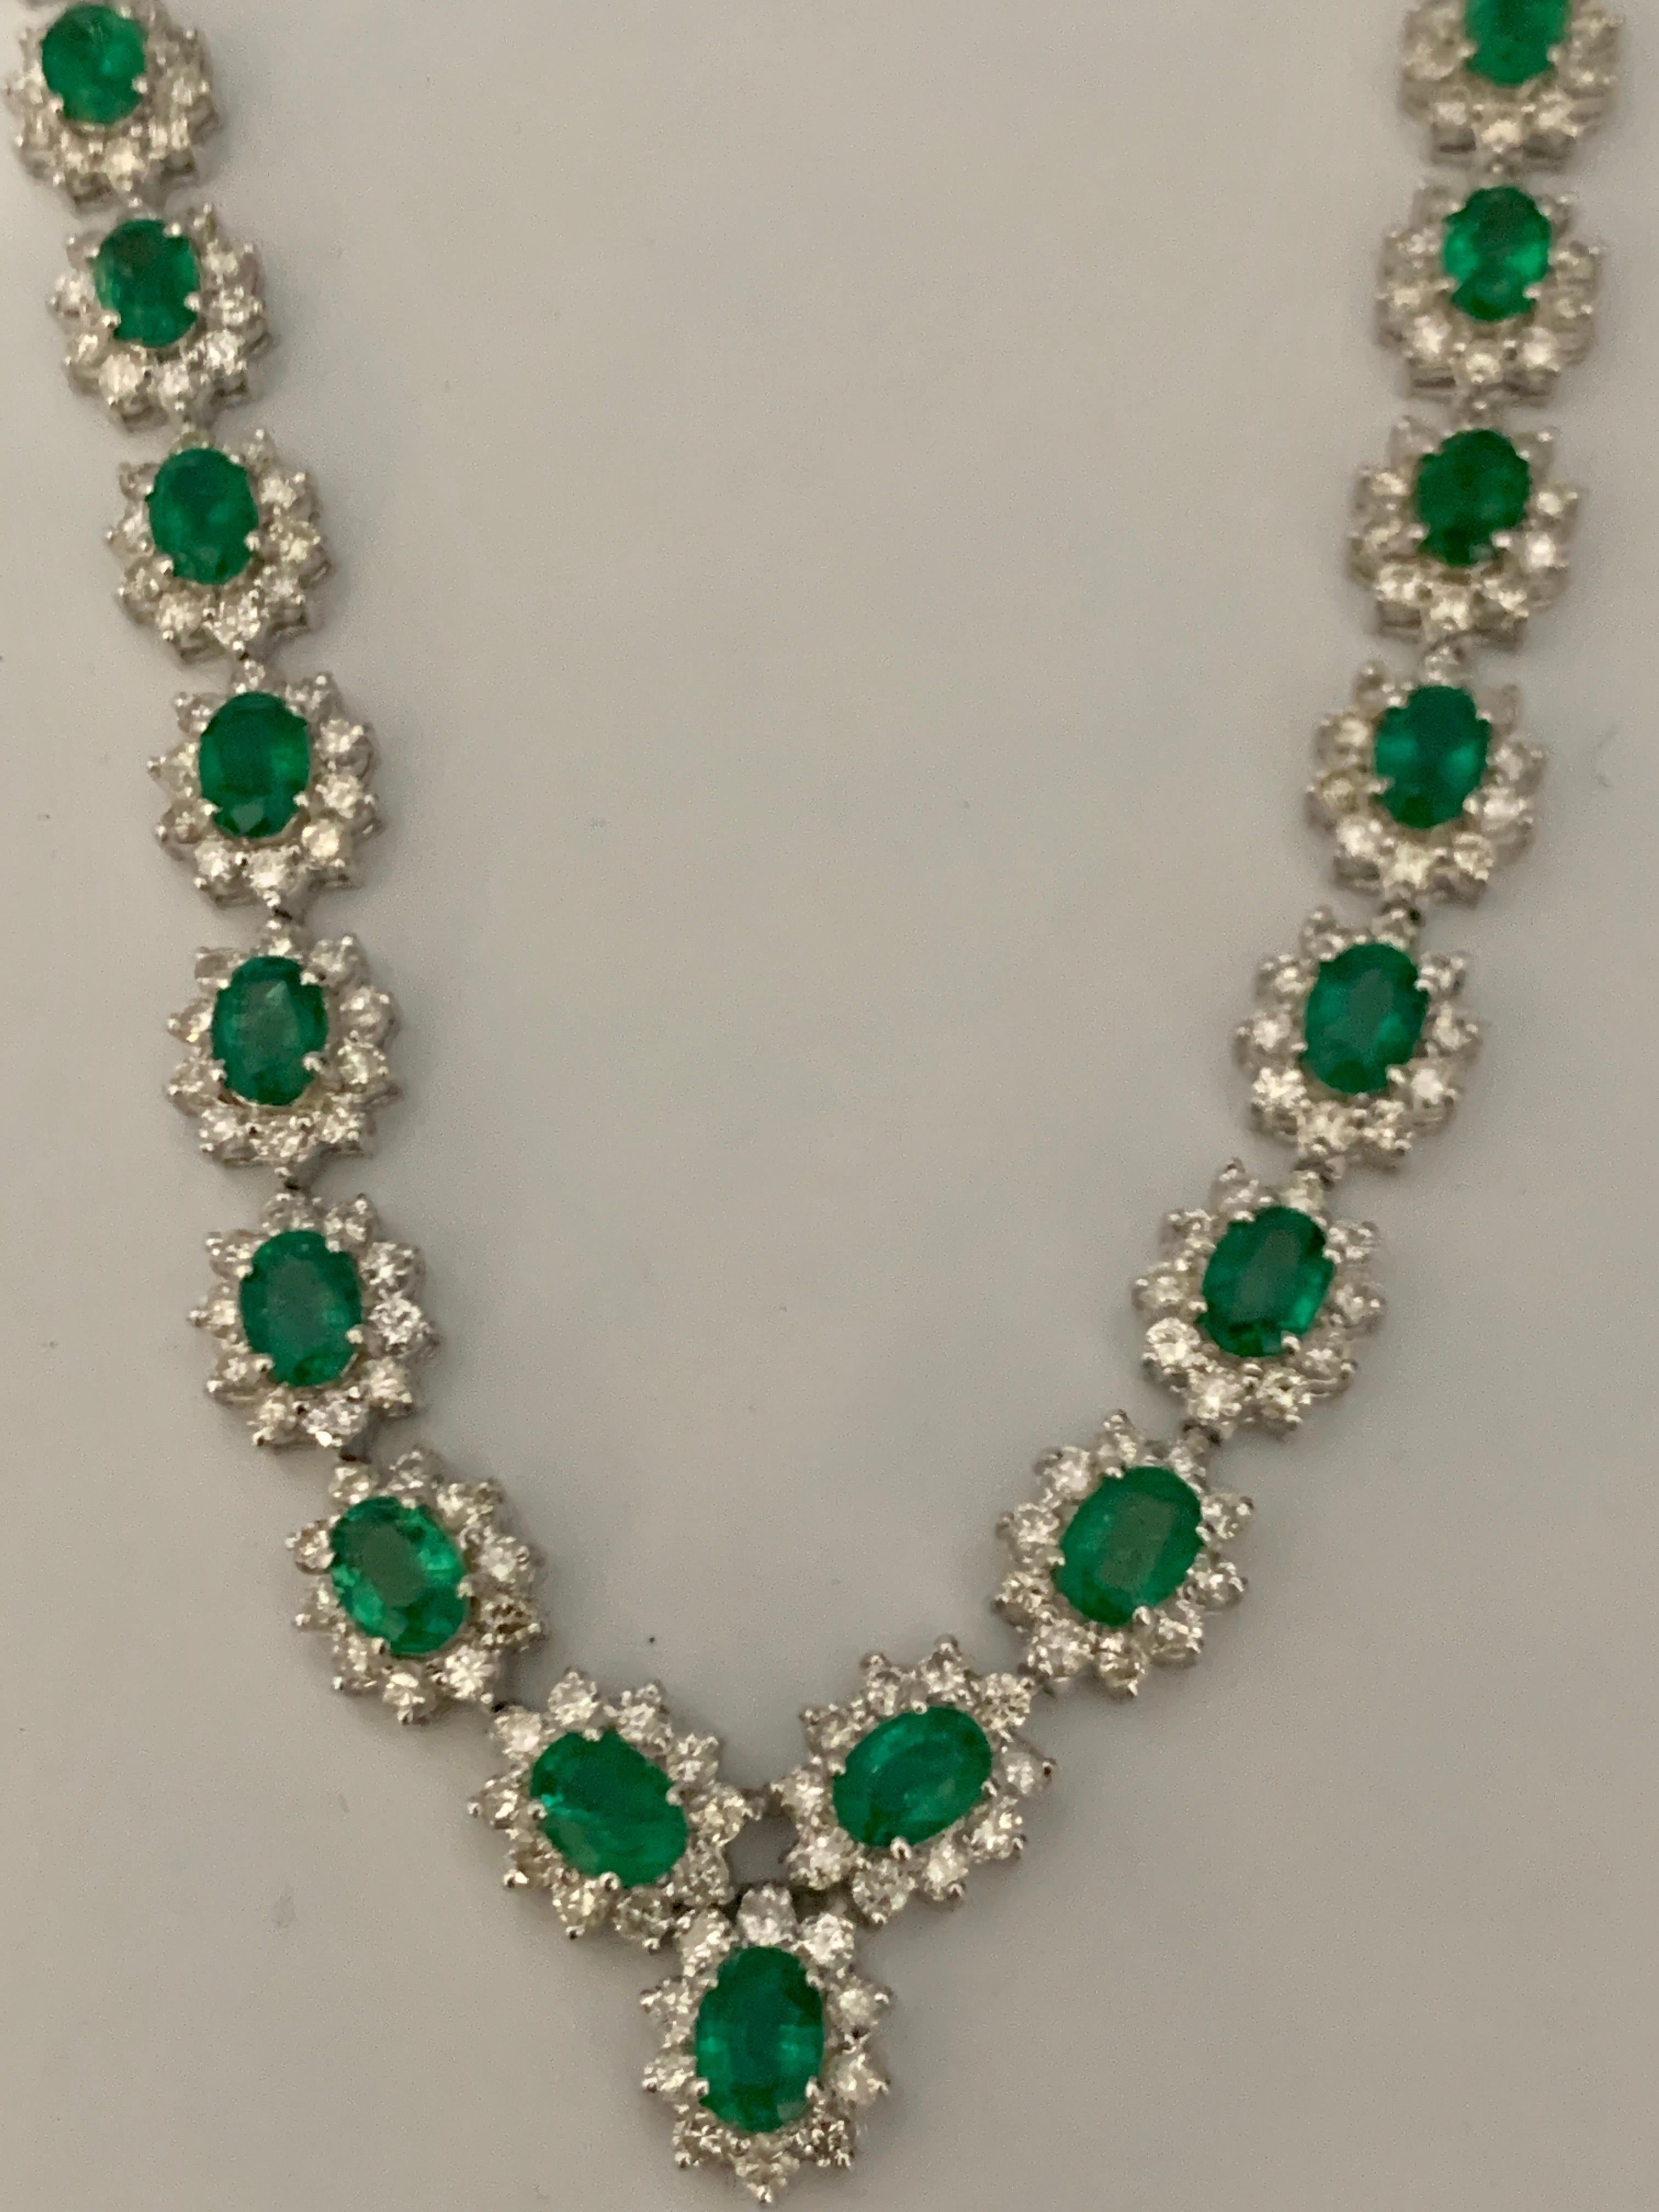 30 Carat Oval Shape Natural Emerald & 23 Carat Diamond Necklace in 18 Karat Gold For Sale 4